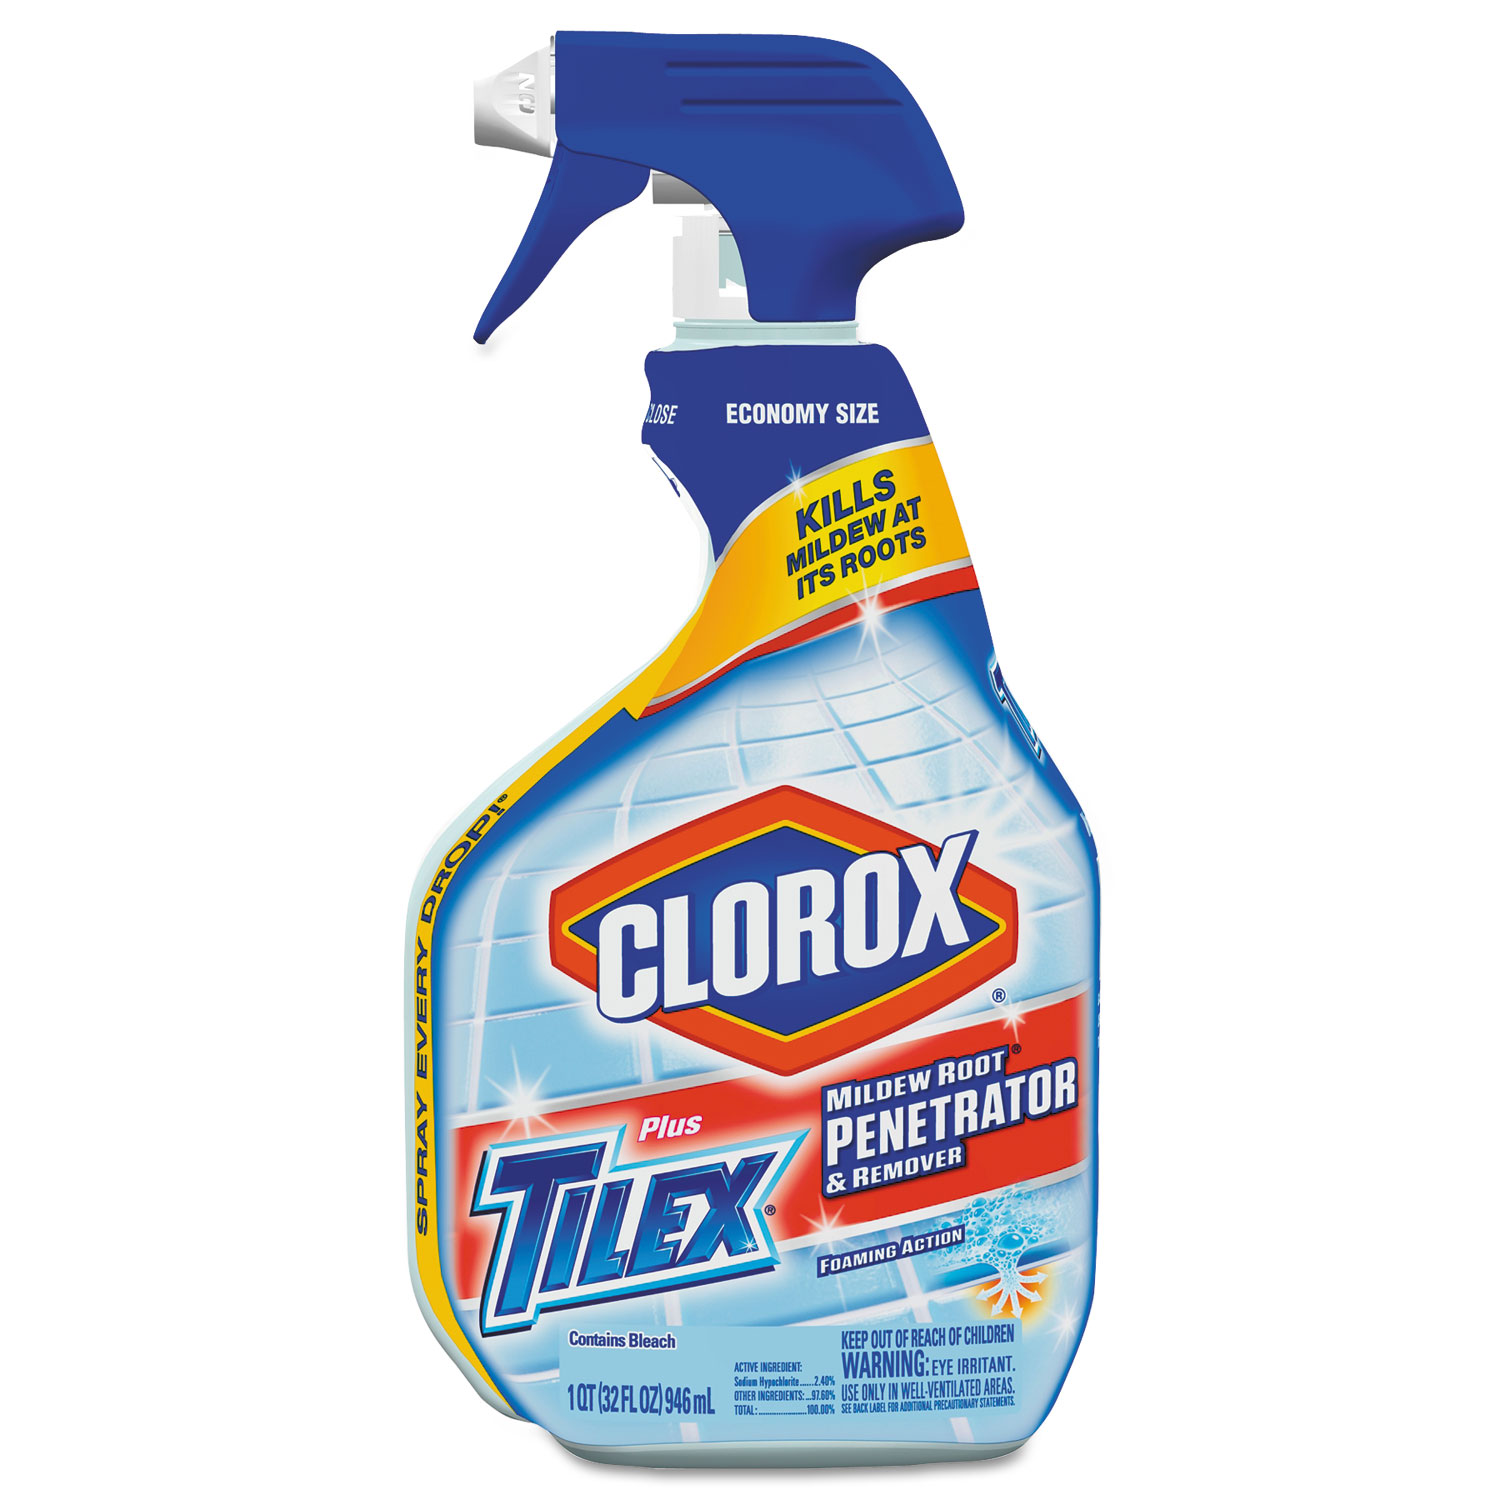  Clorox CLO 00263 Mildew Root Penetrator and Remover With Bleach, 32oz Smart Tube Spray, 9/Carton (CLO00263) 